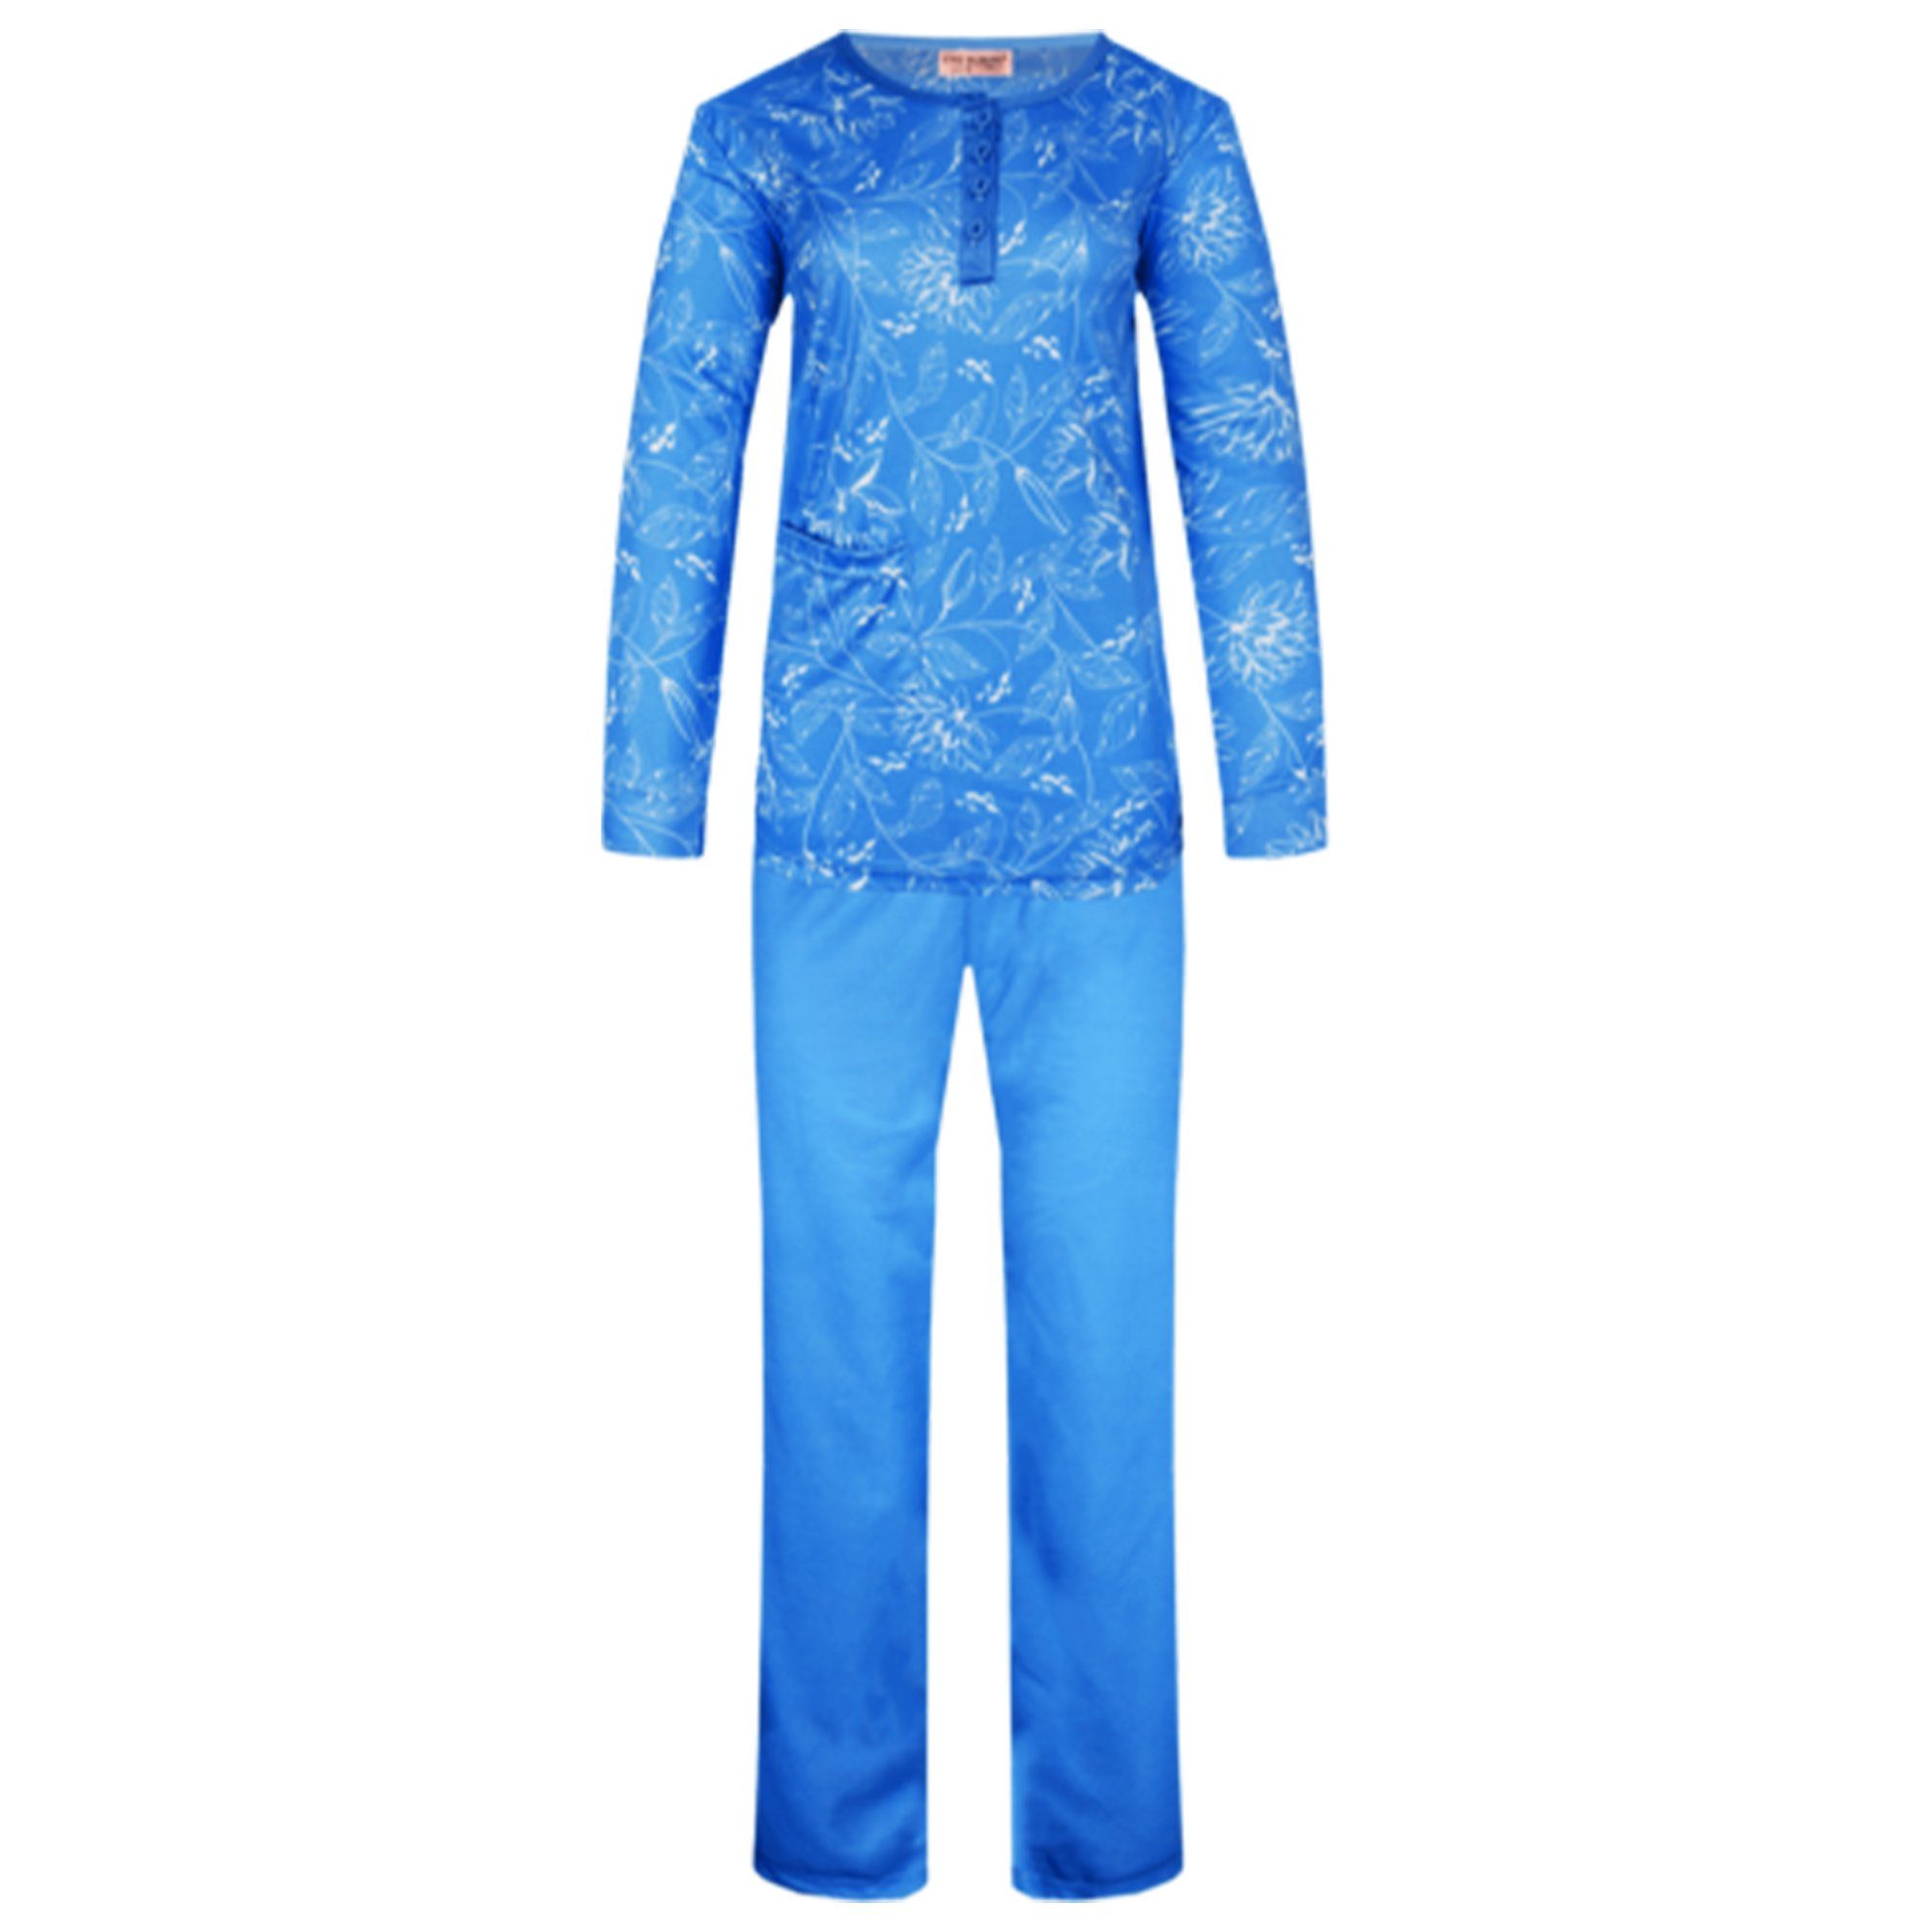 TEXEMP Pyjama Damen Pyjama Schlafanzug Set Baumwolle Langarm Nachtwäsche Lang (Set) 90% Baumwolle Blau